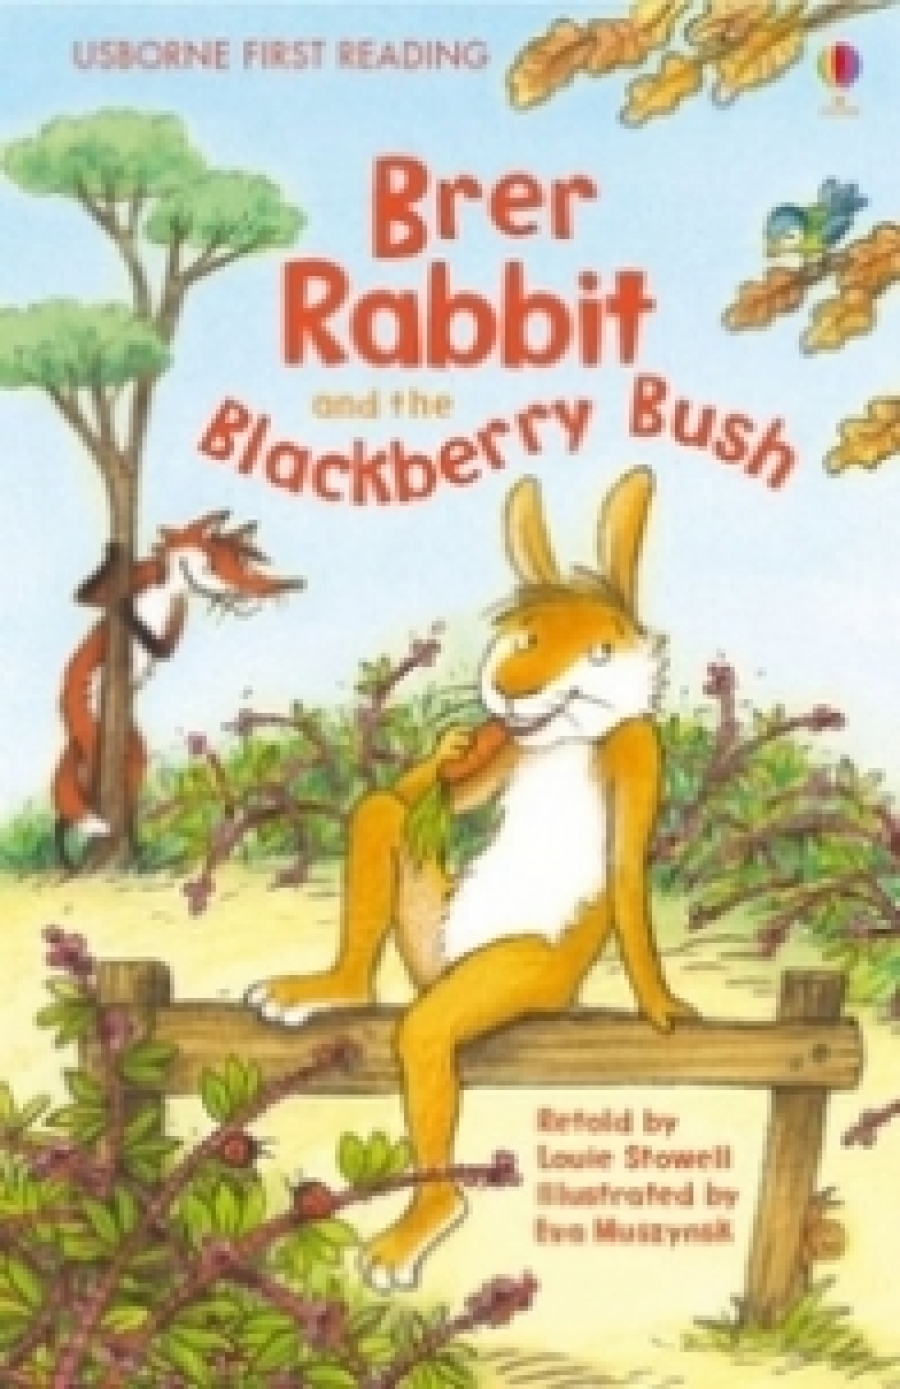 Louie S. Brer Rabbit and the Blackberry Bush 